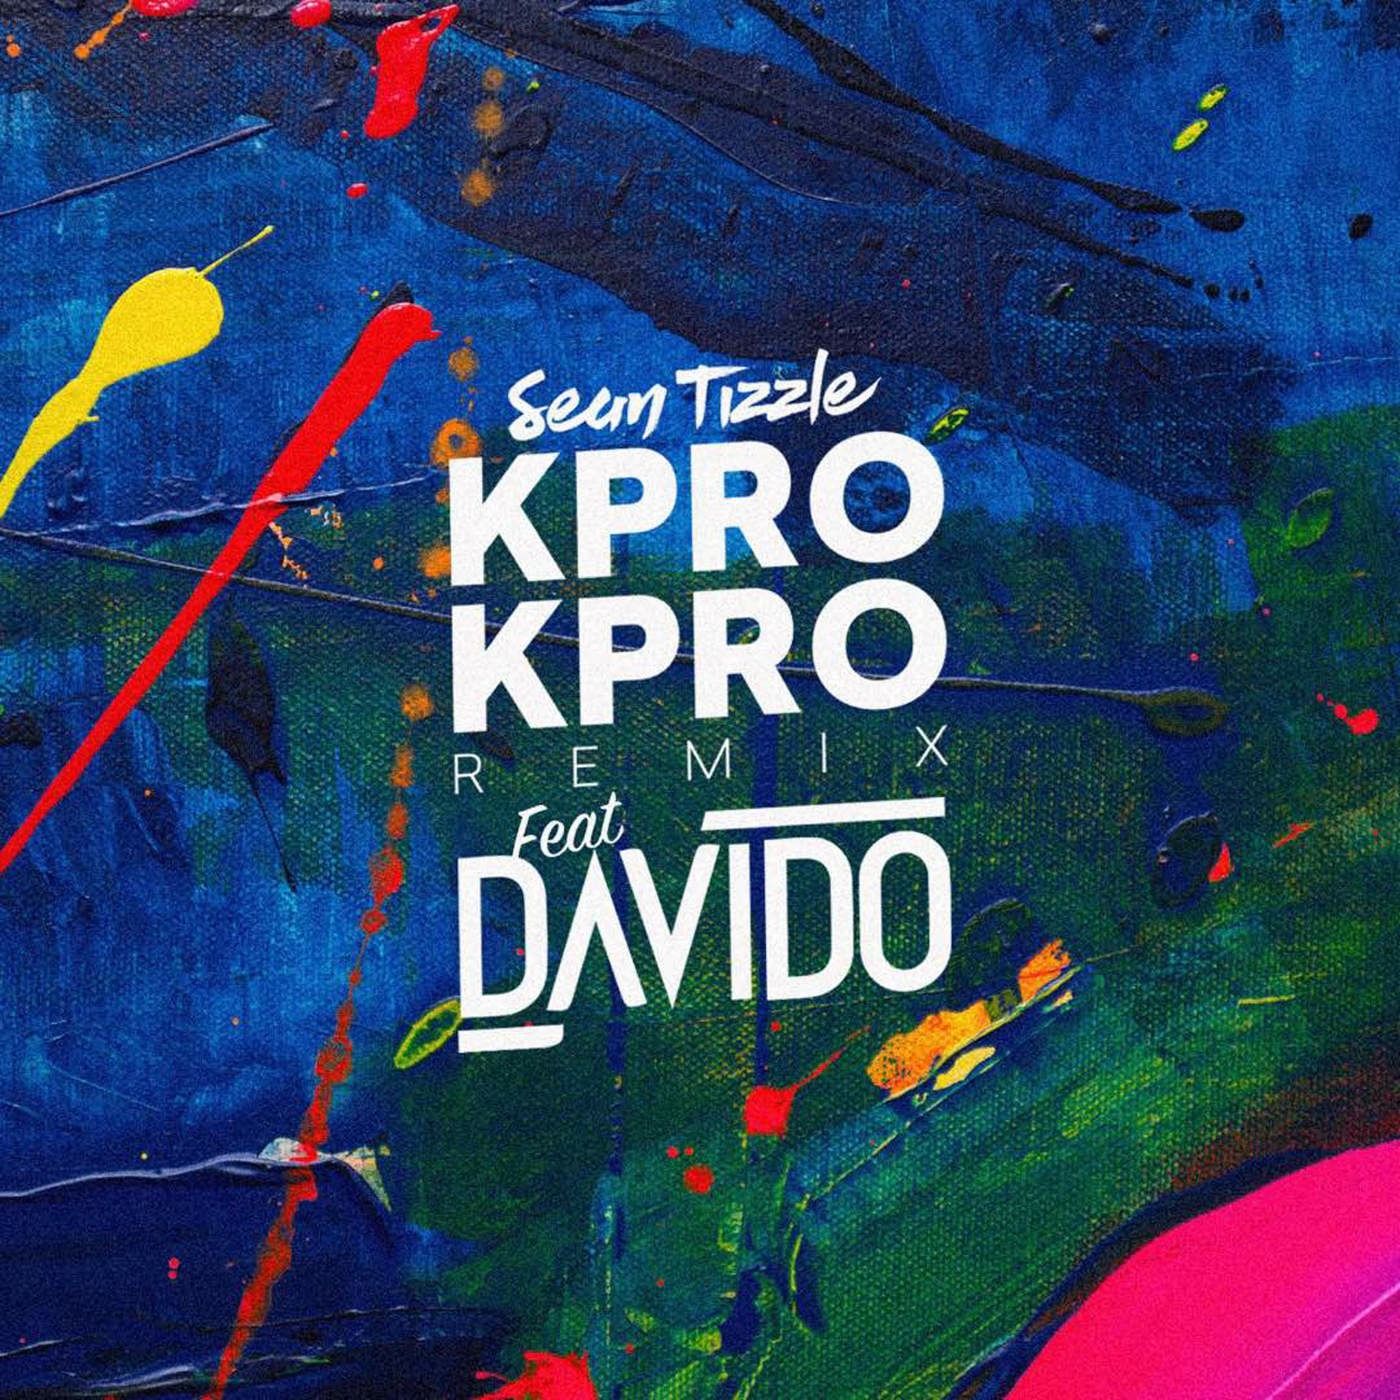 Sean Tizzle ft. DavidO - KPRO KPRO (Remix) Artwork | AceWorldTeam.com